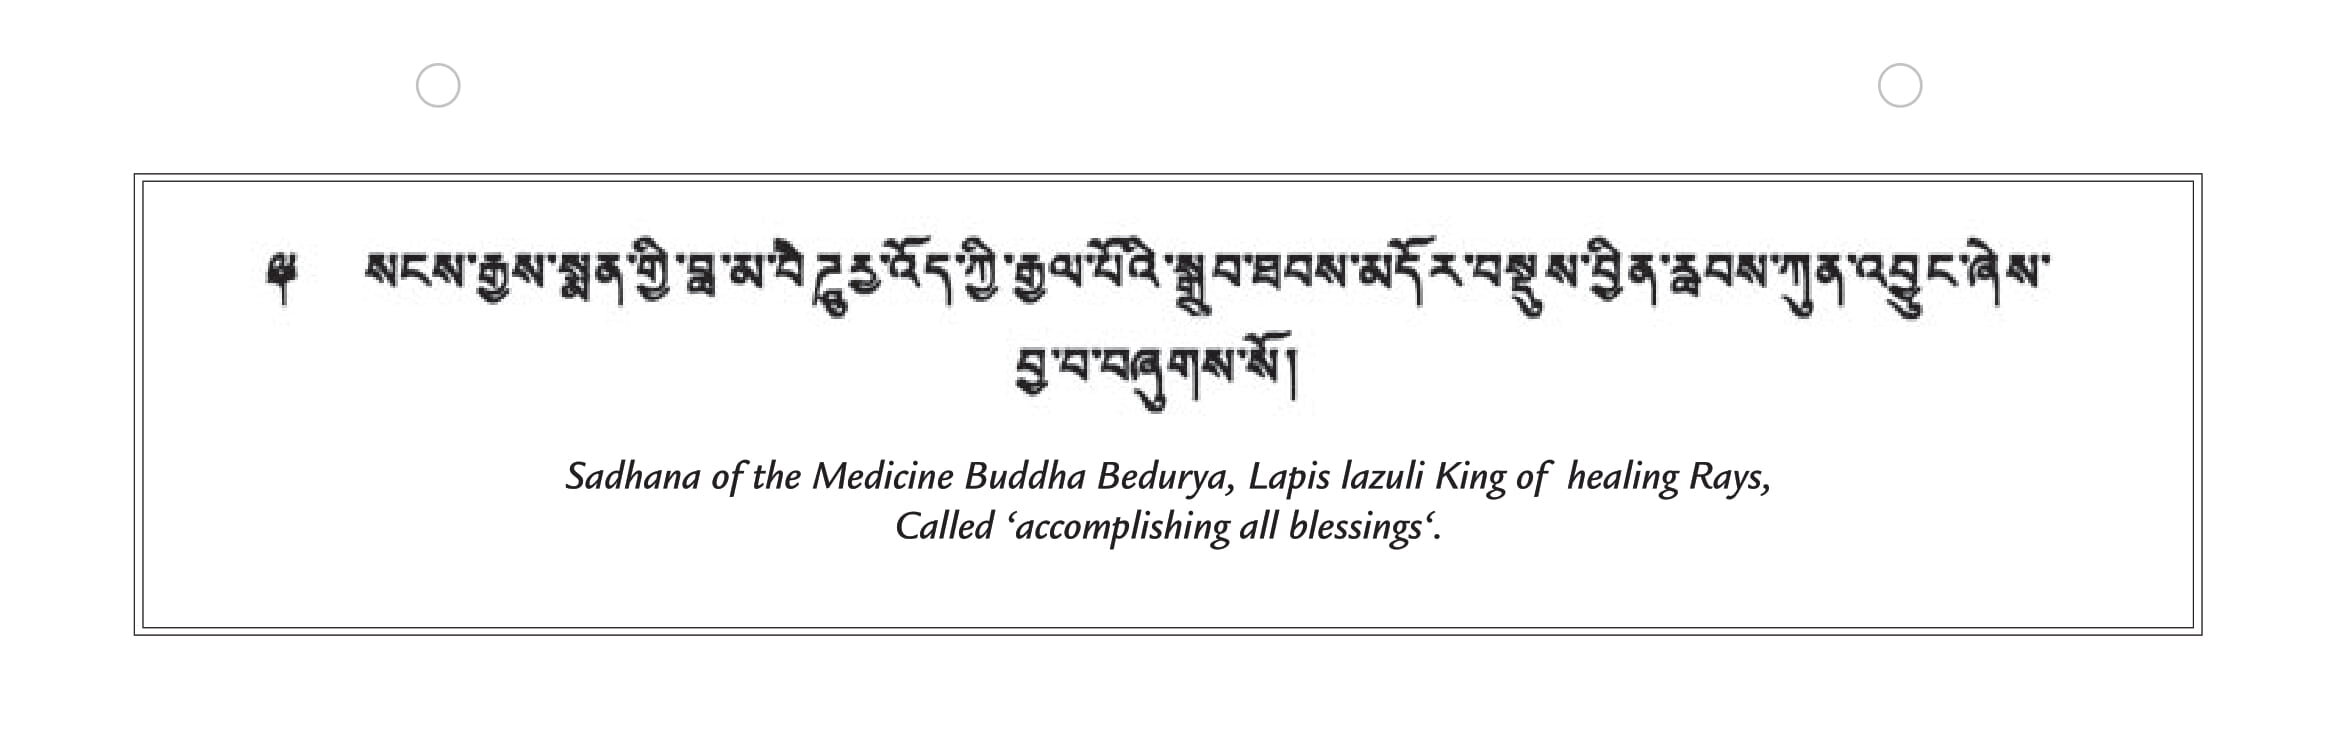 MY MEDICINE BUDDHA sadhana TIB-ENGLISH LAST VERSION copy-01.jpg